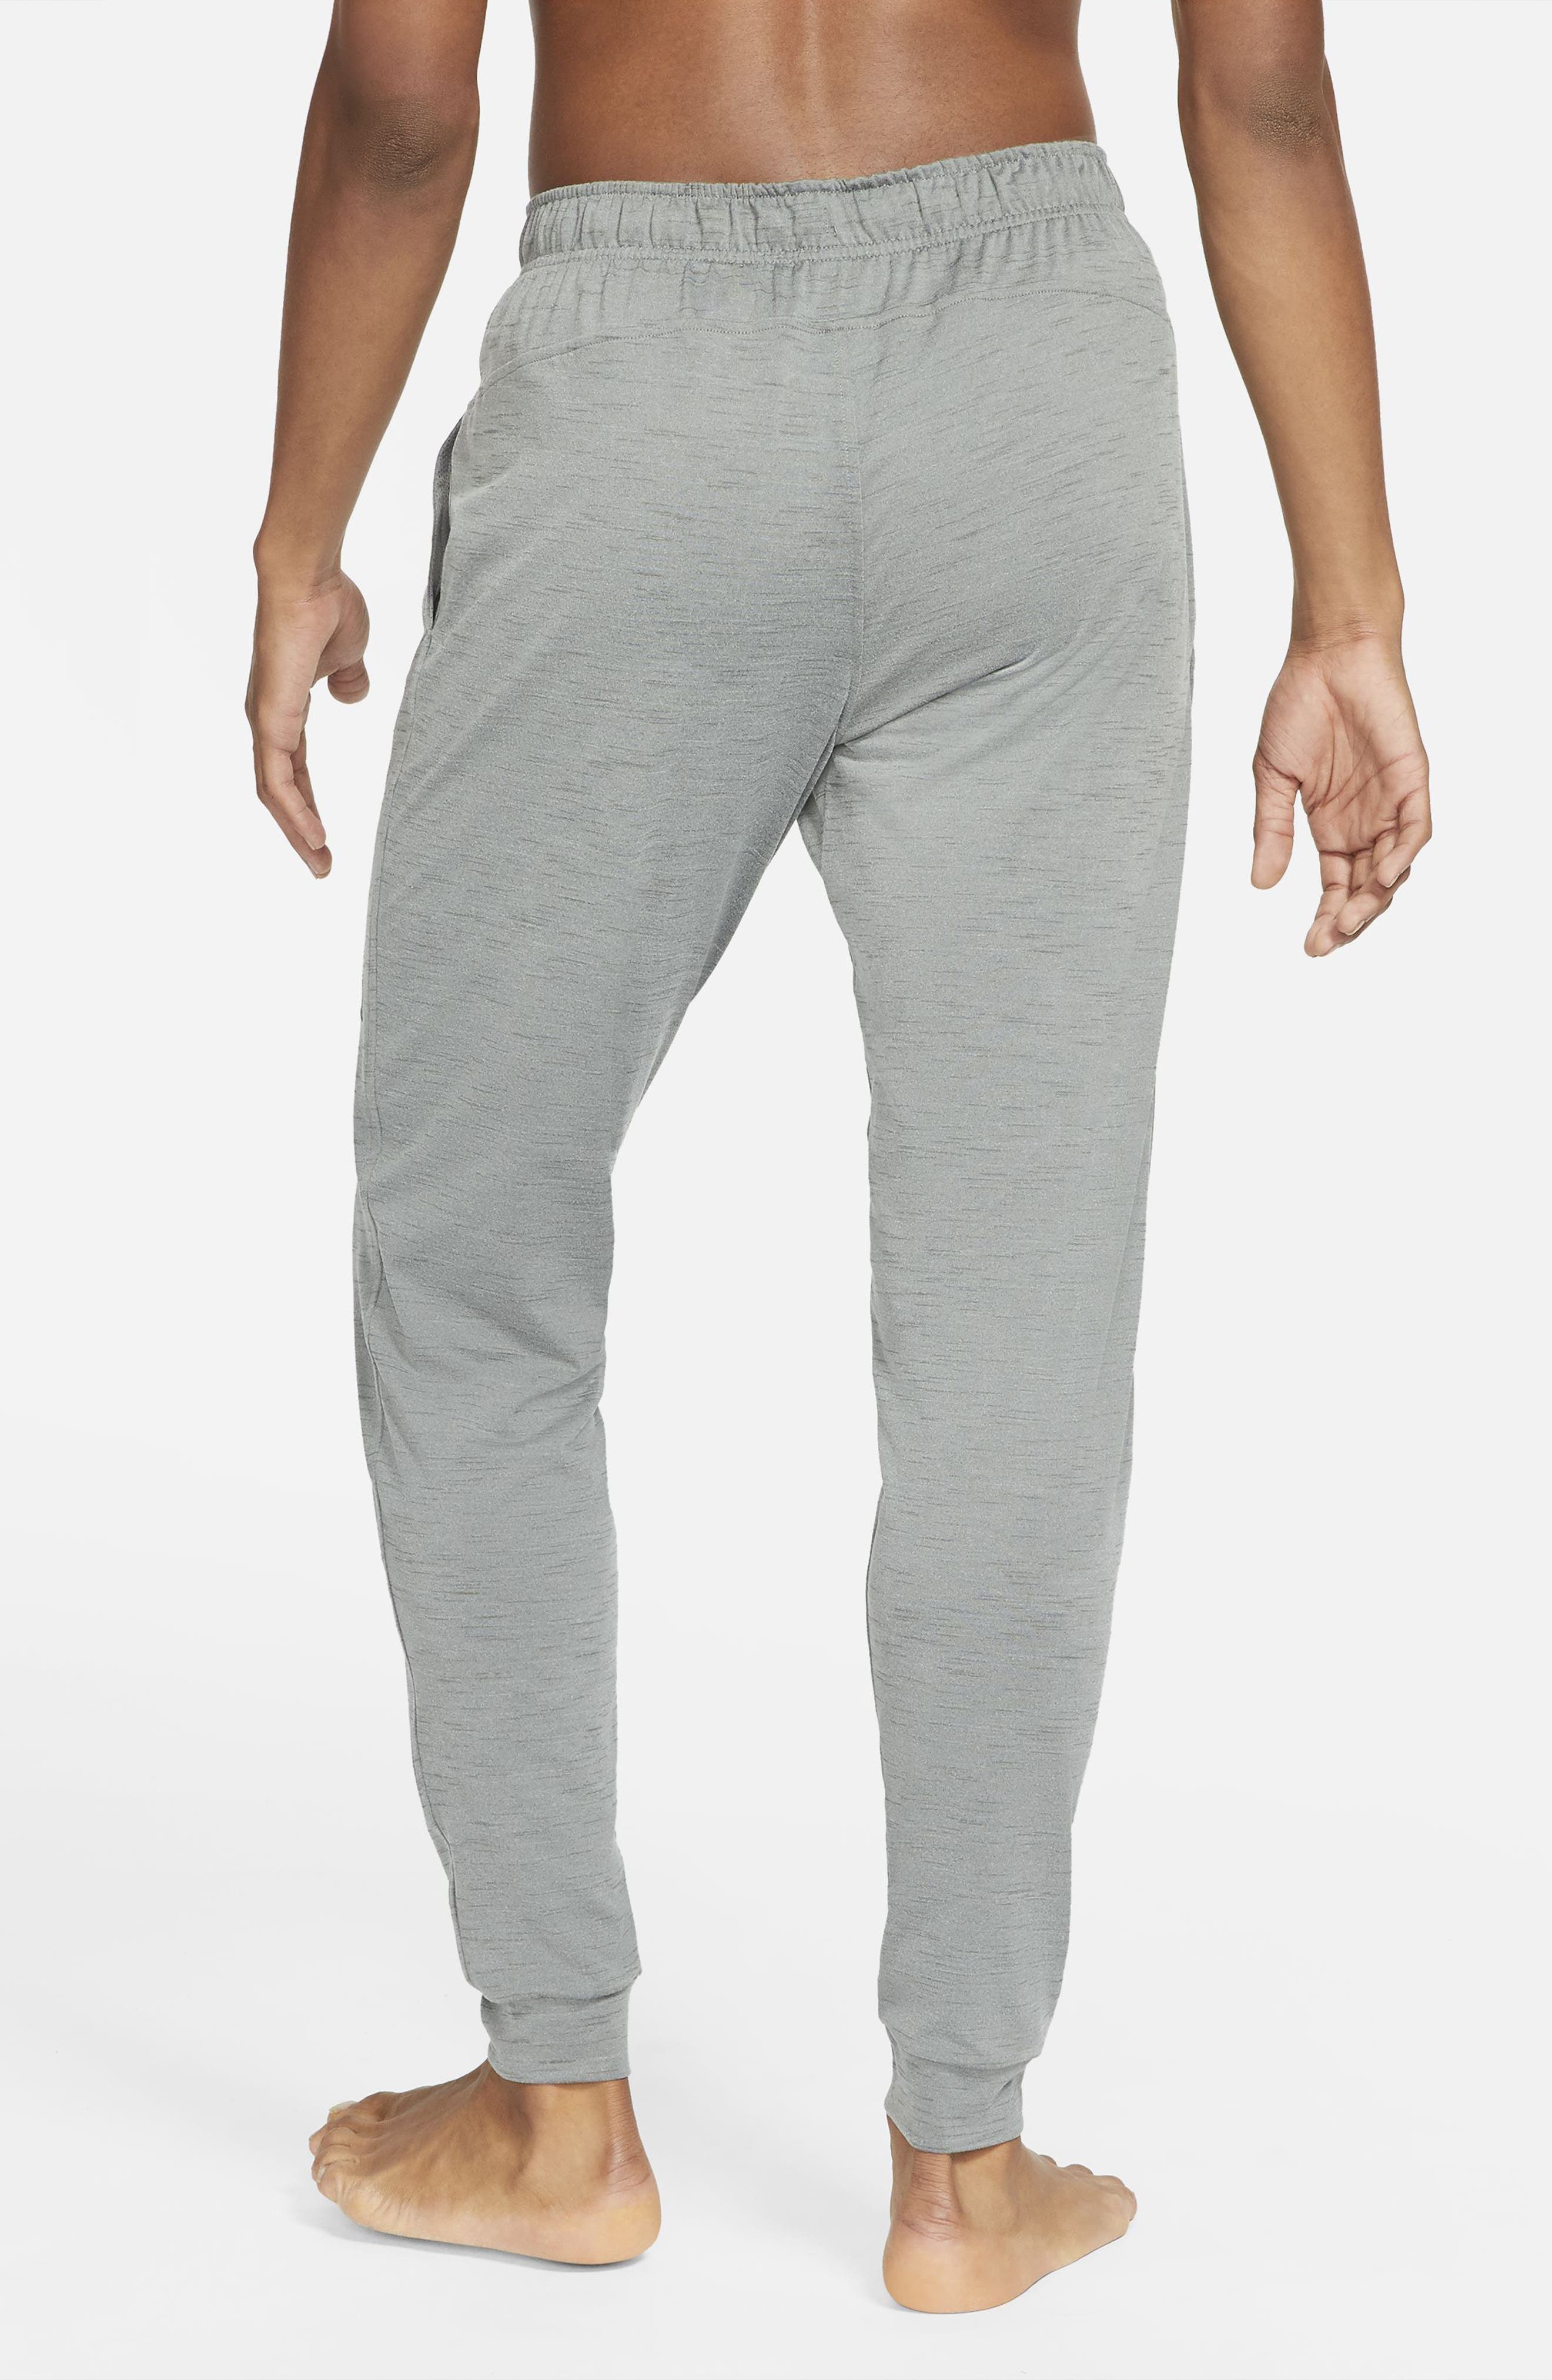 Gray XL Jack & Jones slacks discount 55% MEN FASHION Trousers Sports 